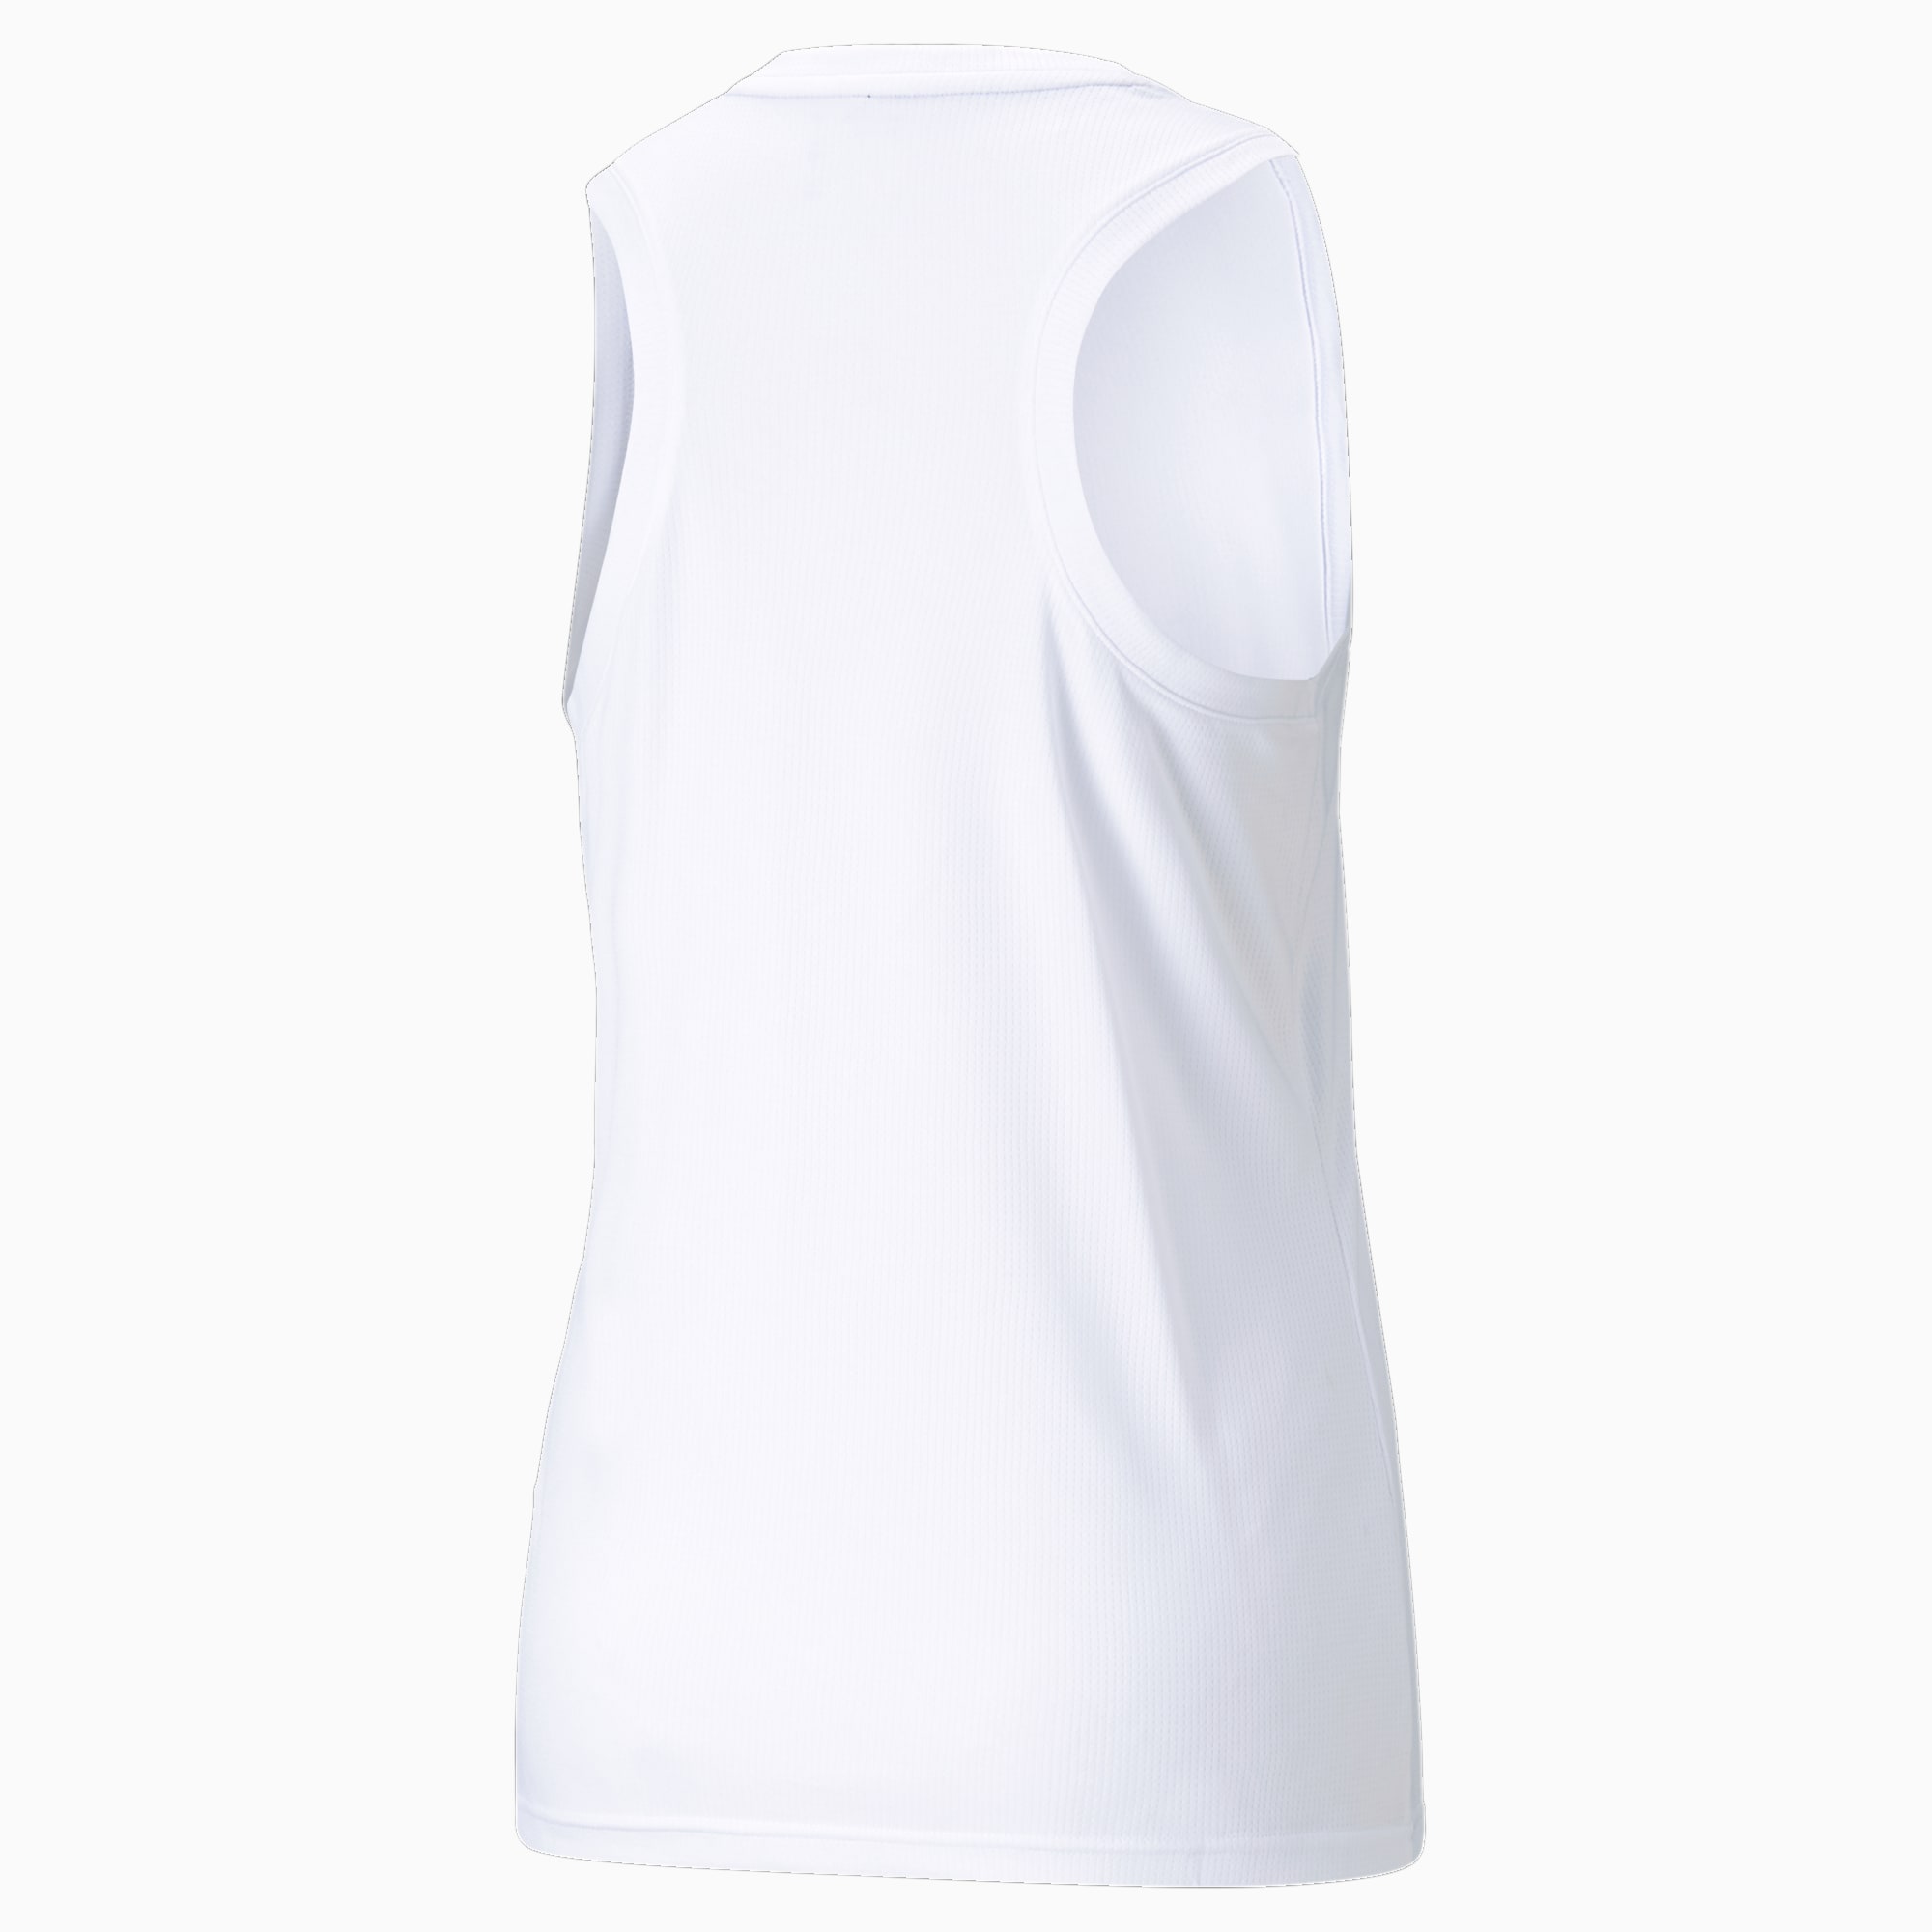 PUMA Performance Women's Training Tank Top Shirt, White, Size XL, Clothing